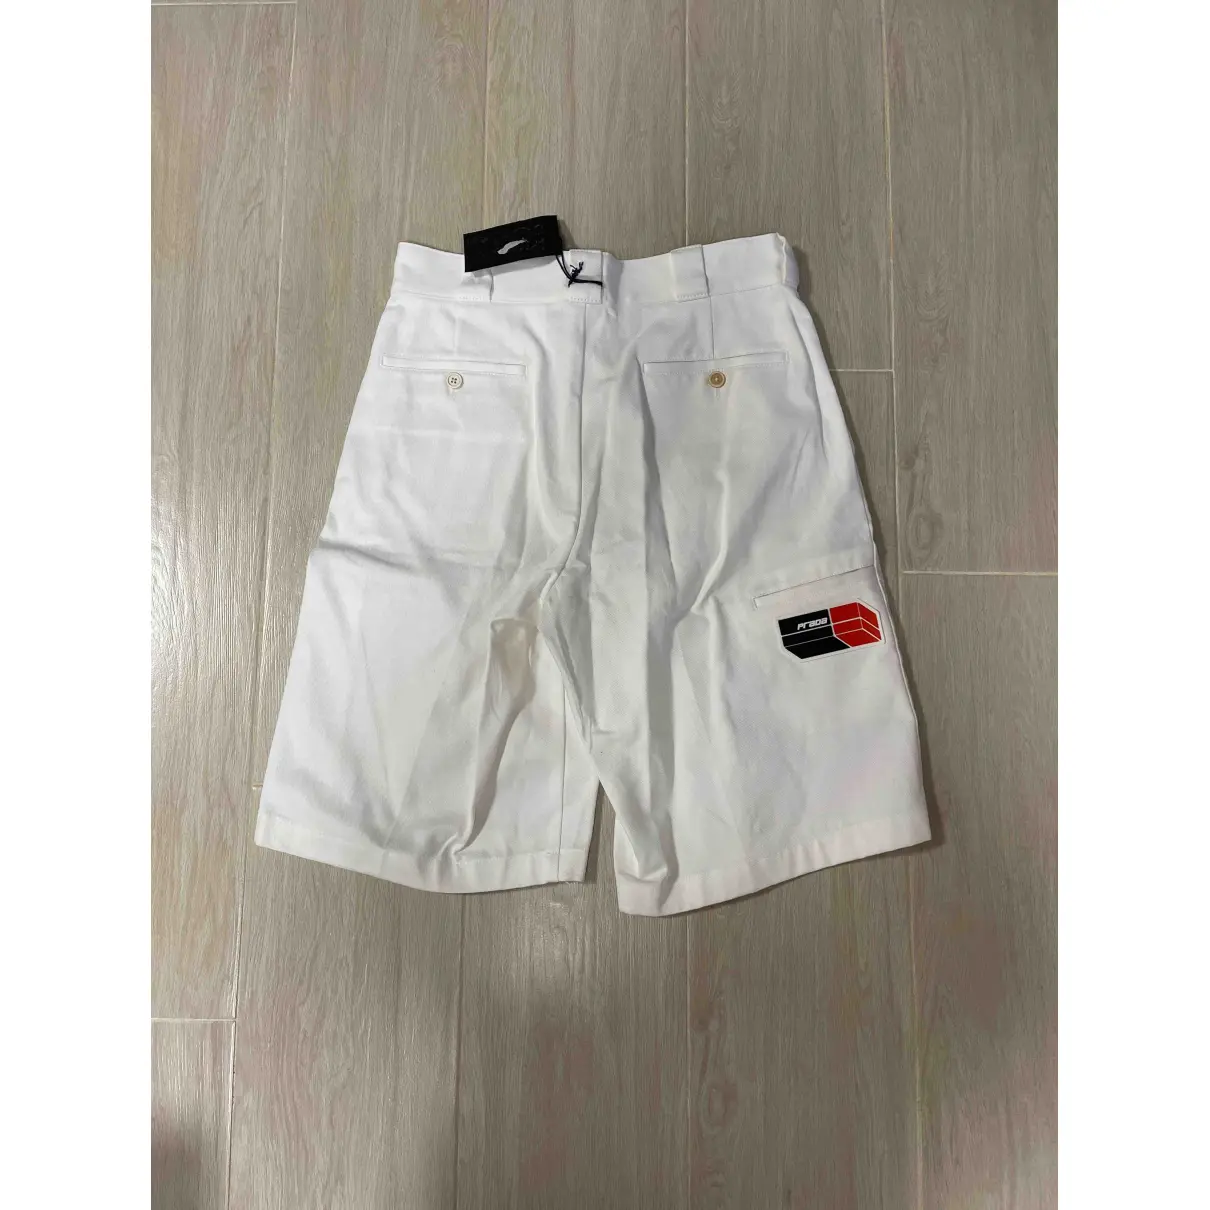 Buy Prada White Cotton Shorts online